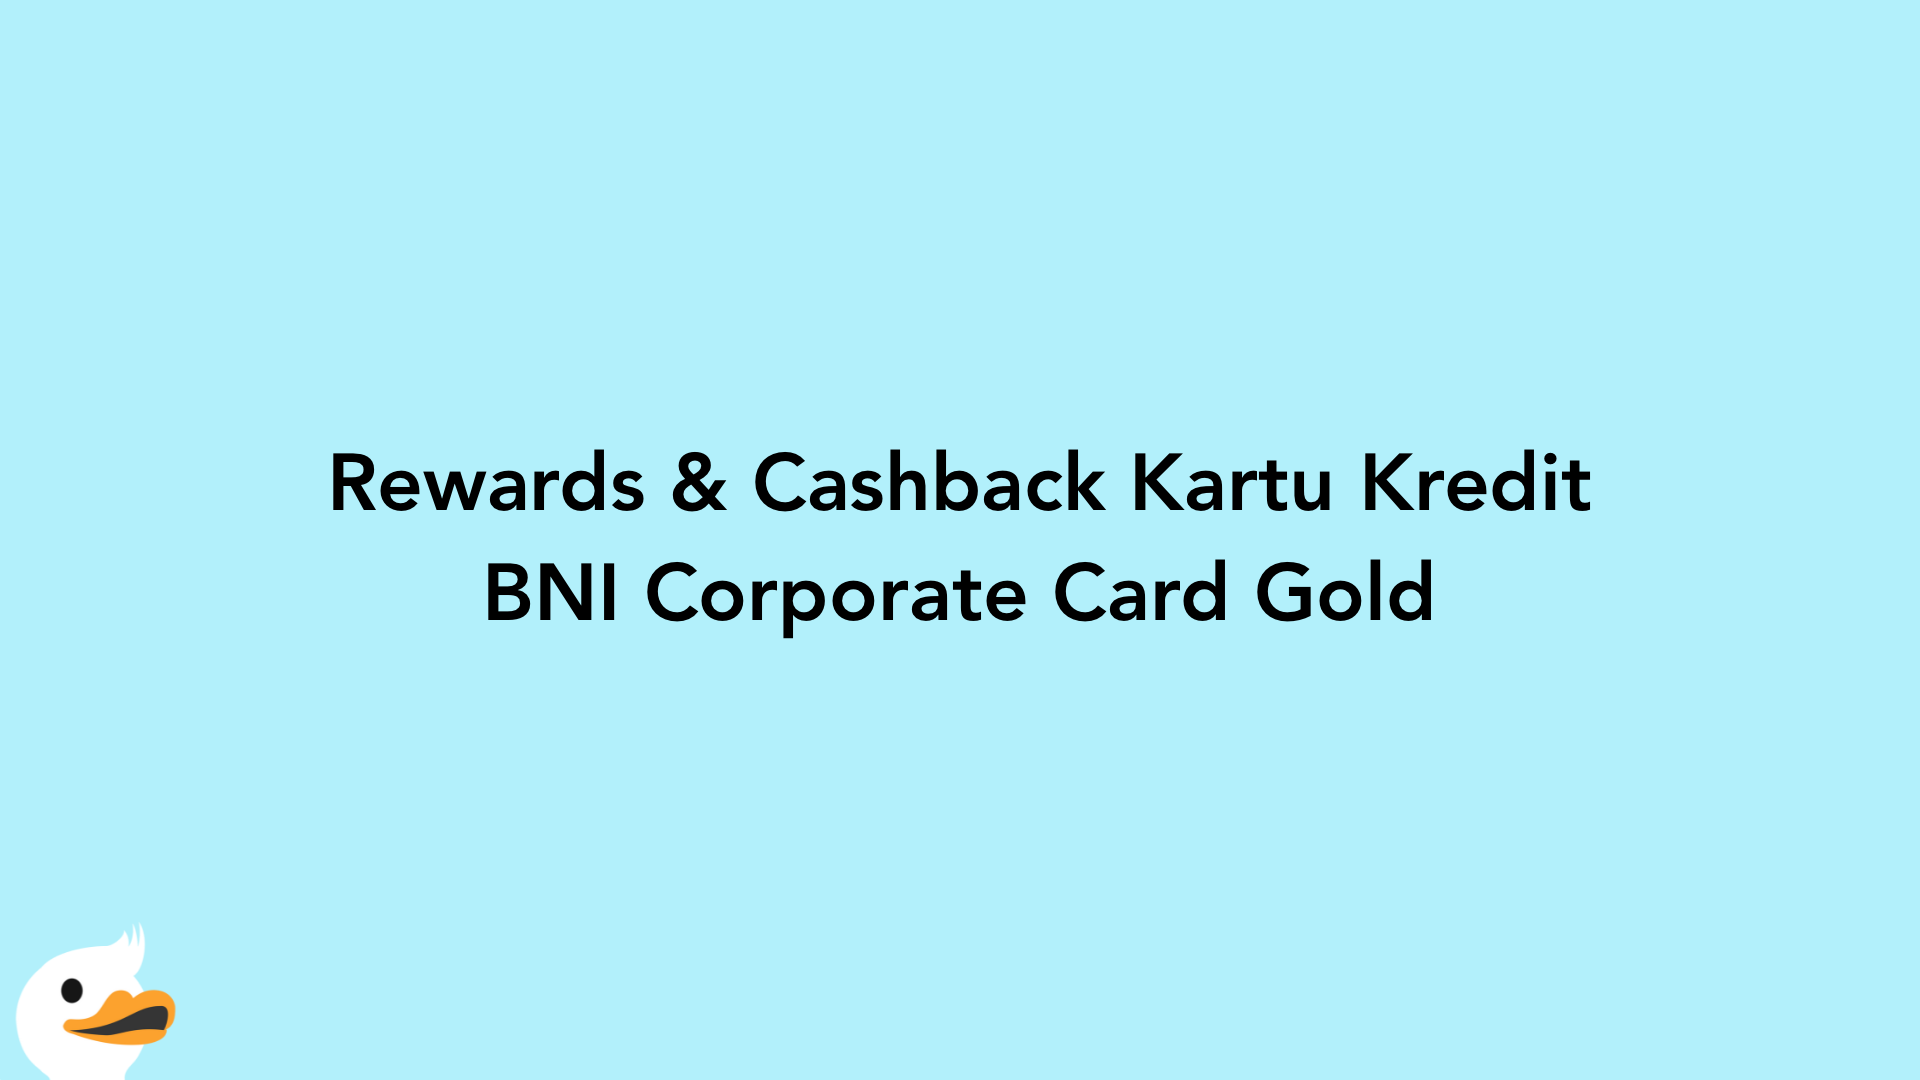 Rewards & Cashback Kartu Kredit BNI Corporate Card Gold